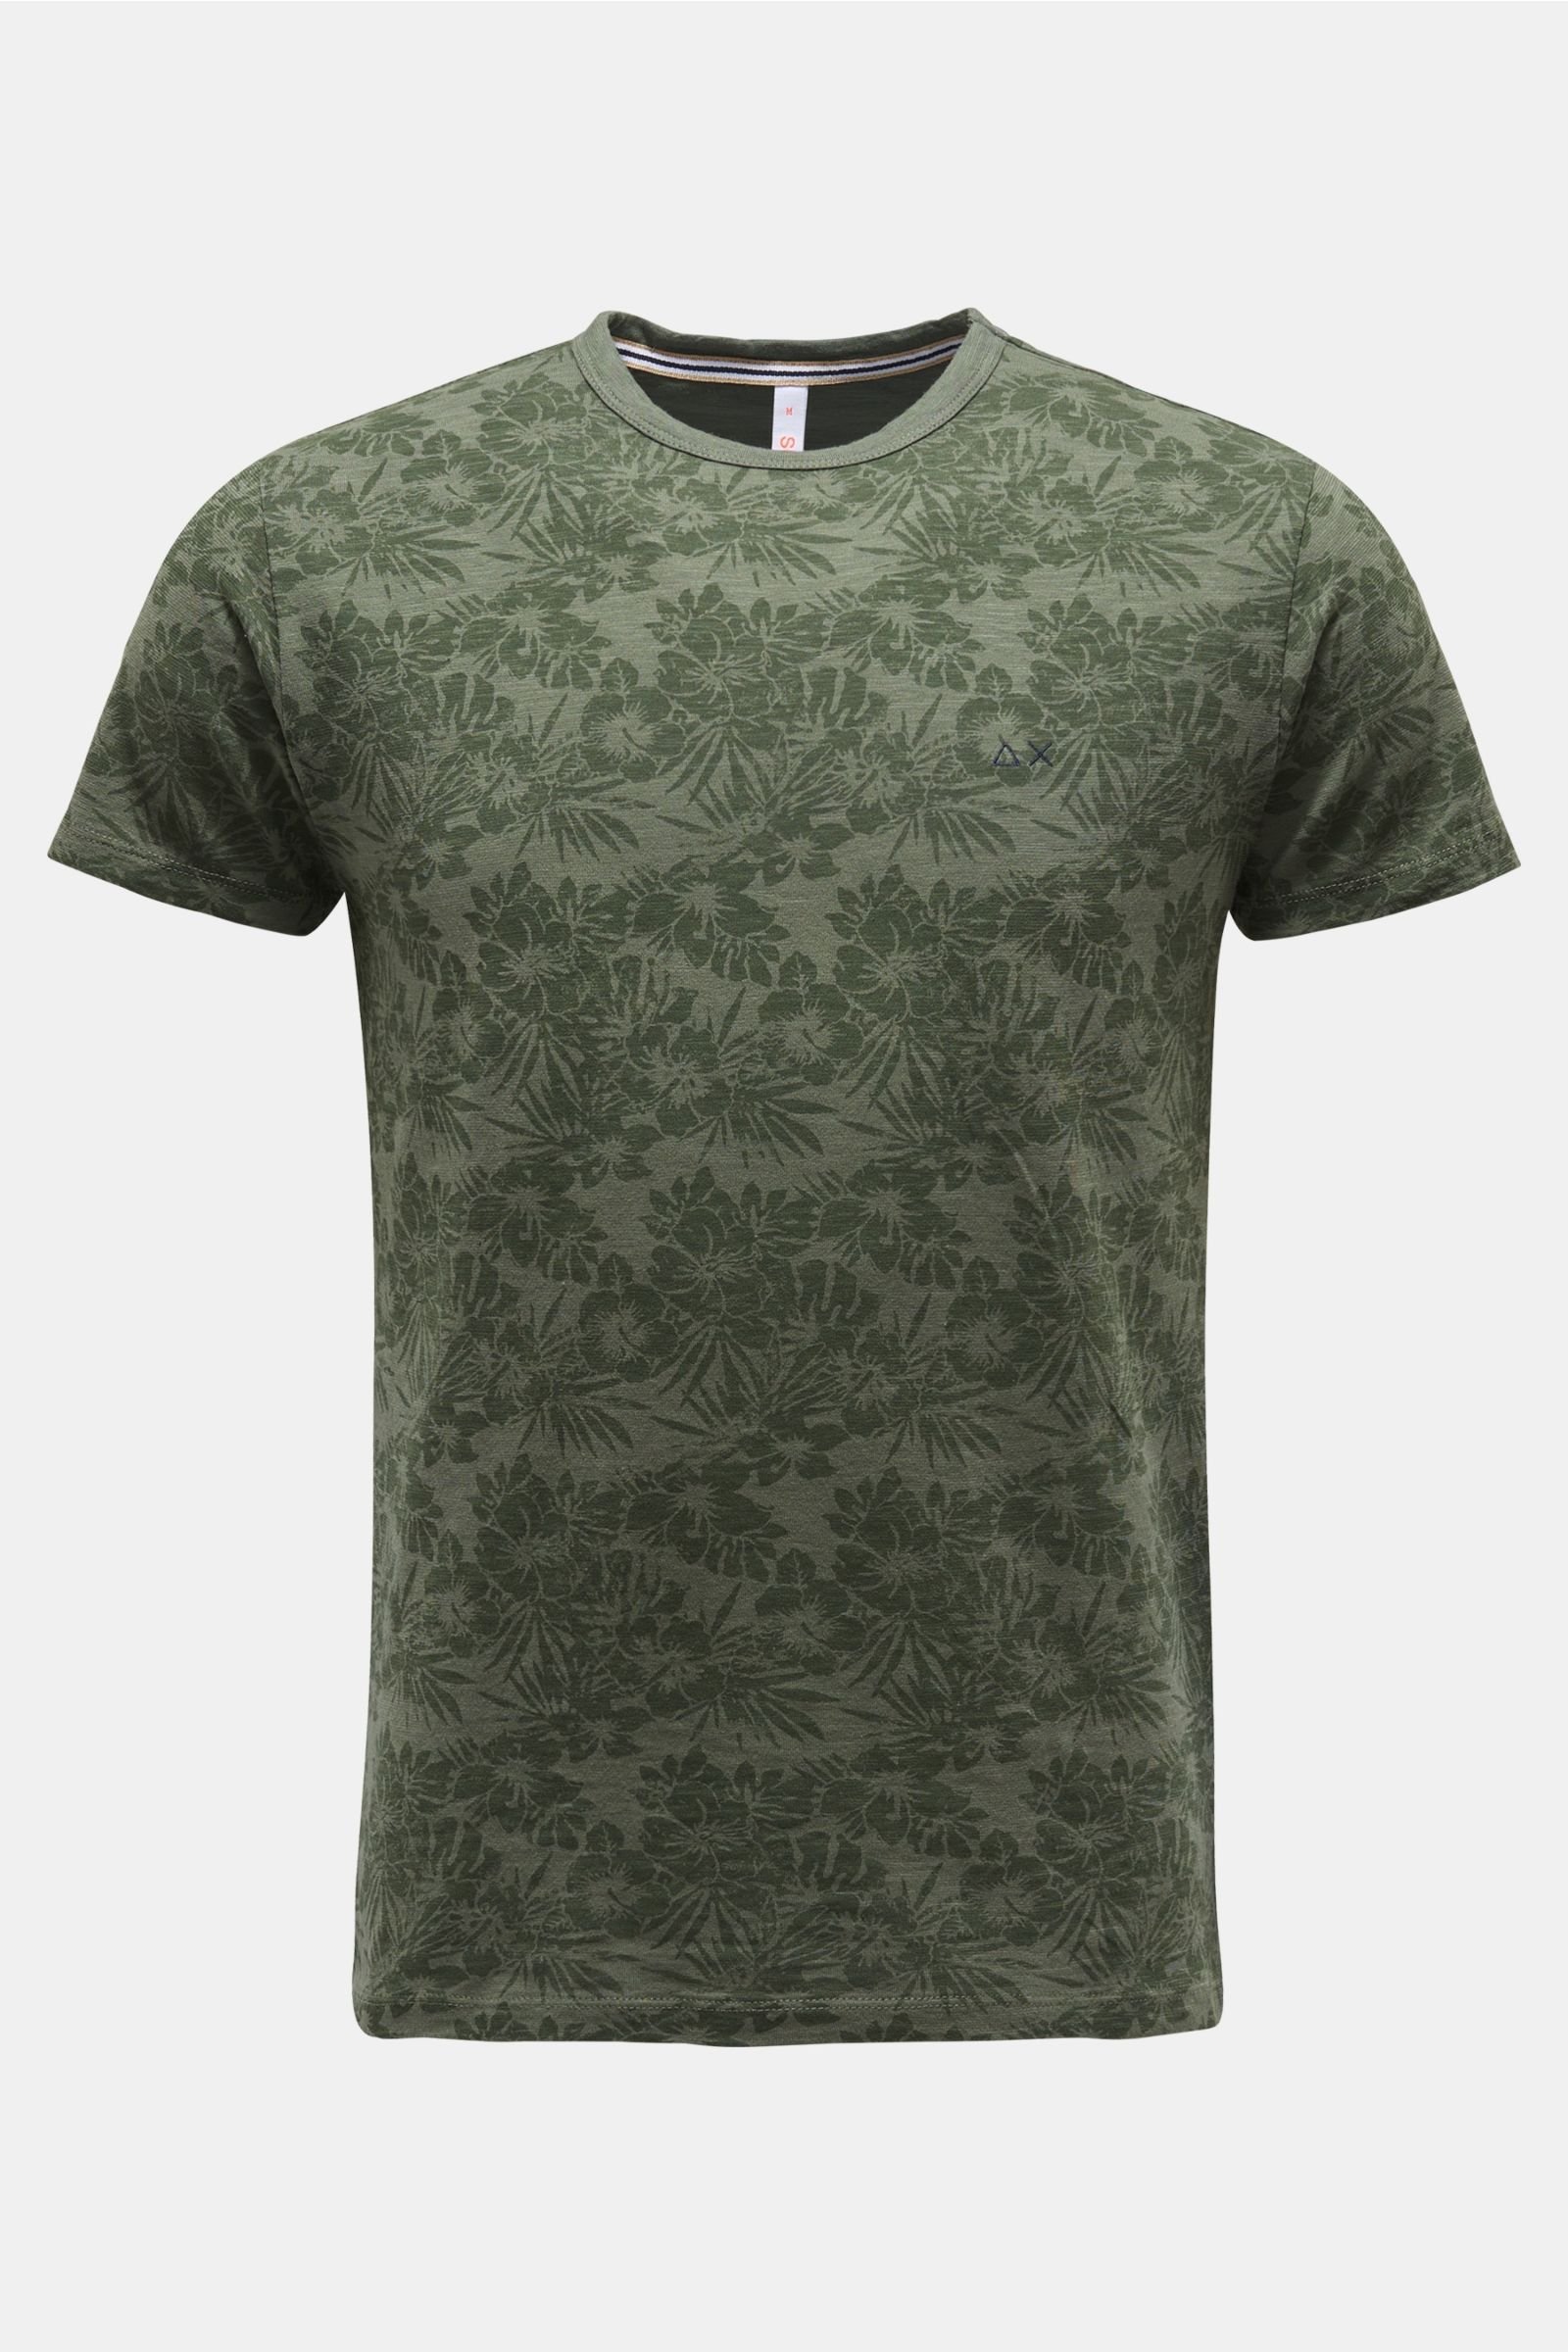 Crew neck T-shirt olive patterned